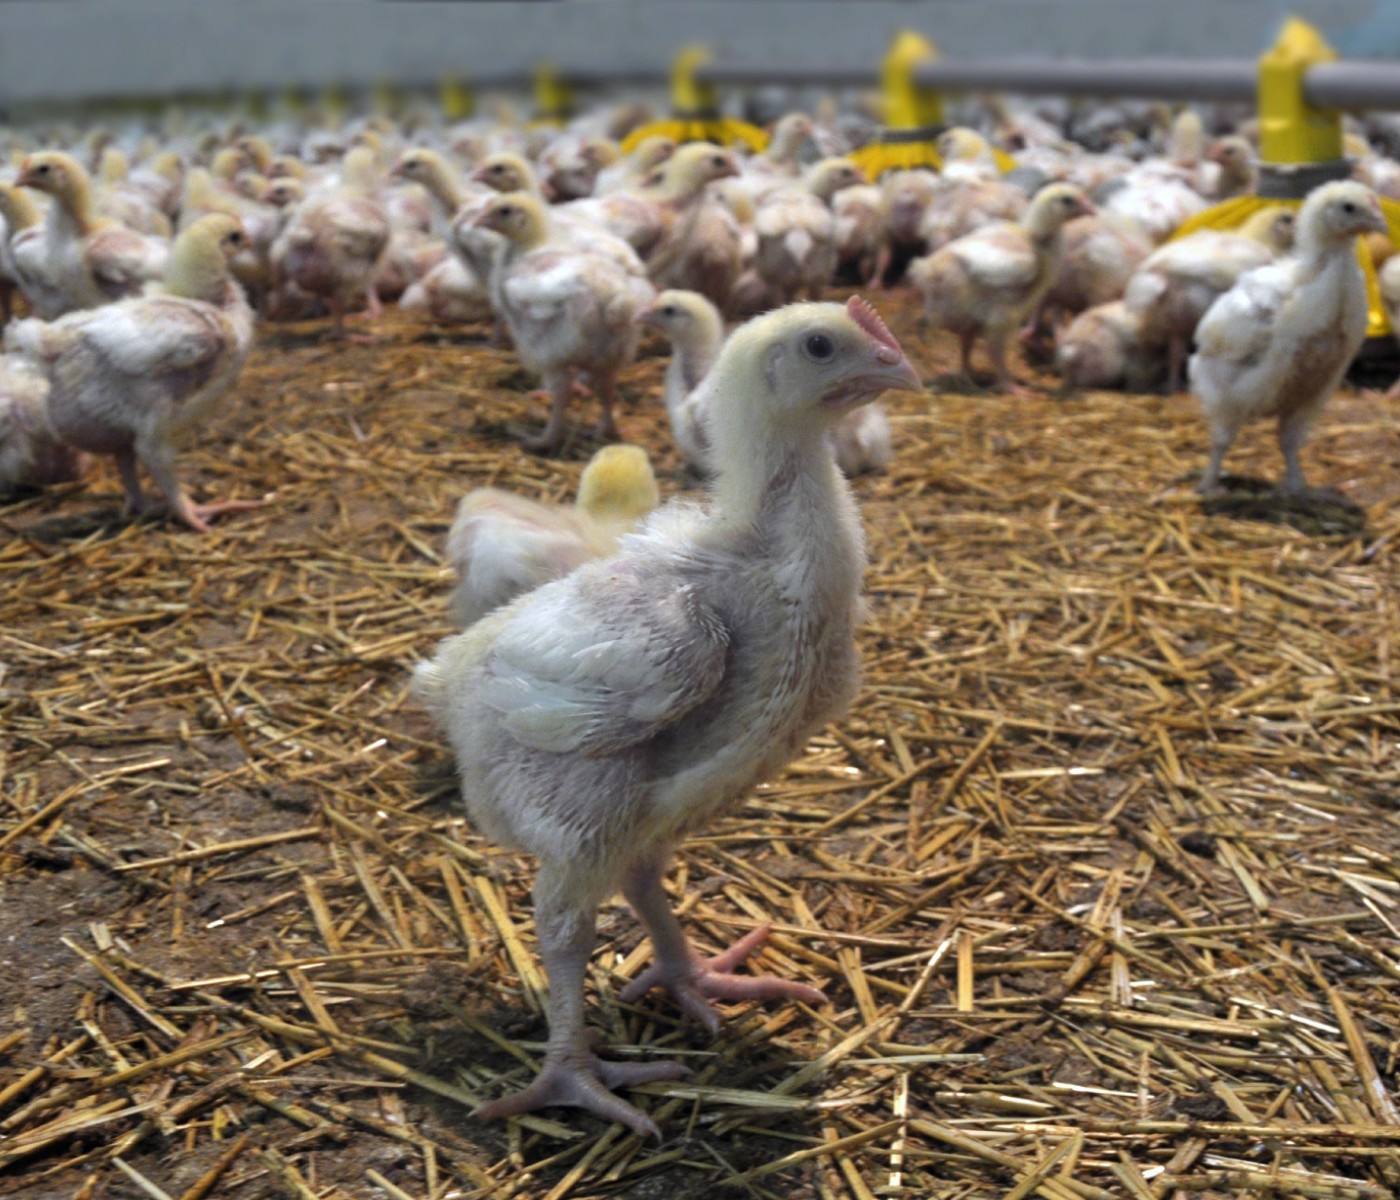 Industria avícola mundial: Perspectivas optimistas para este segundo semestre 2022